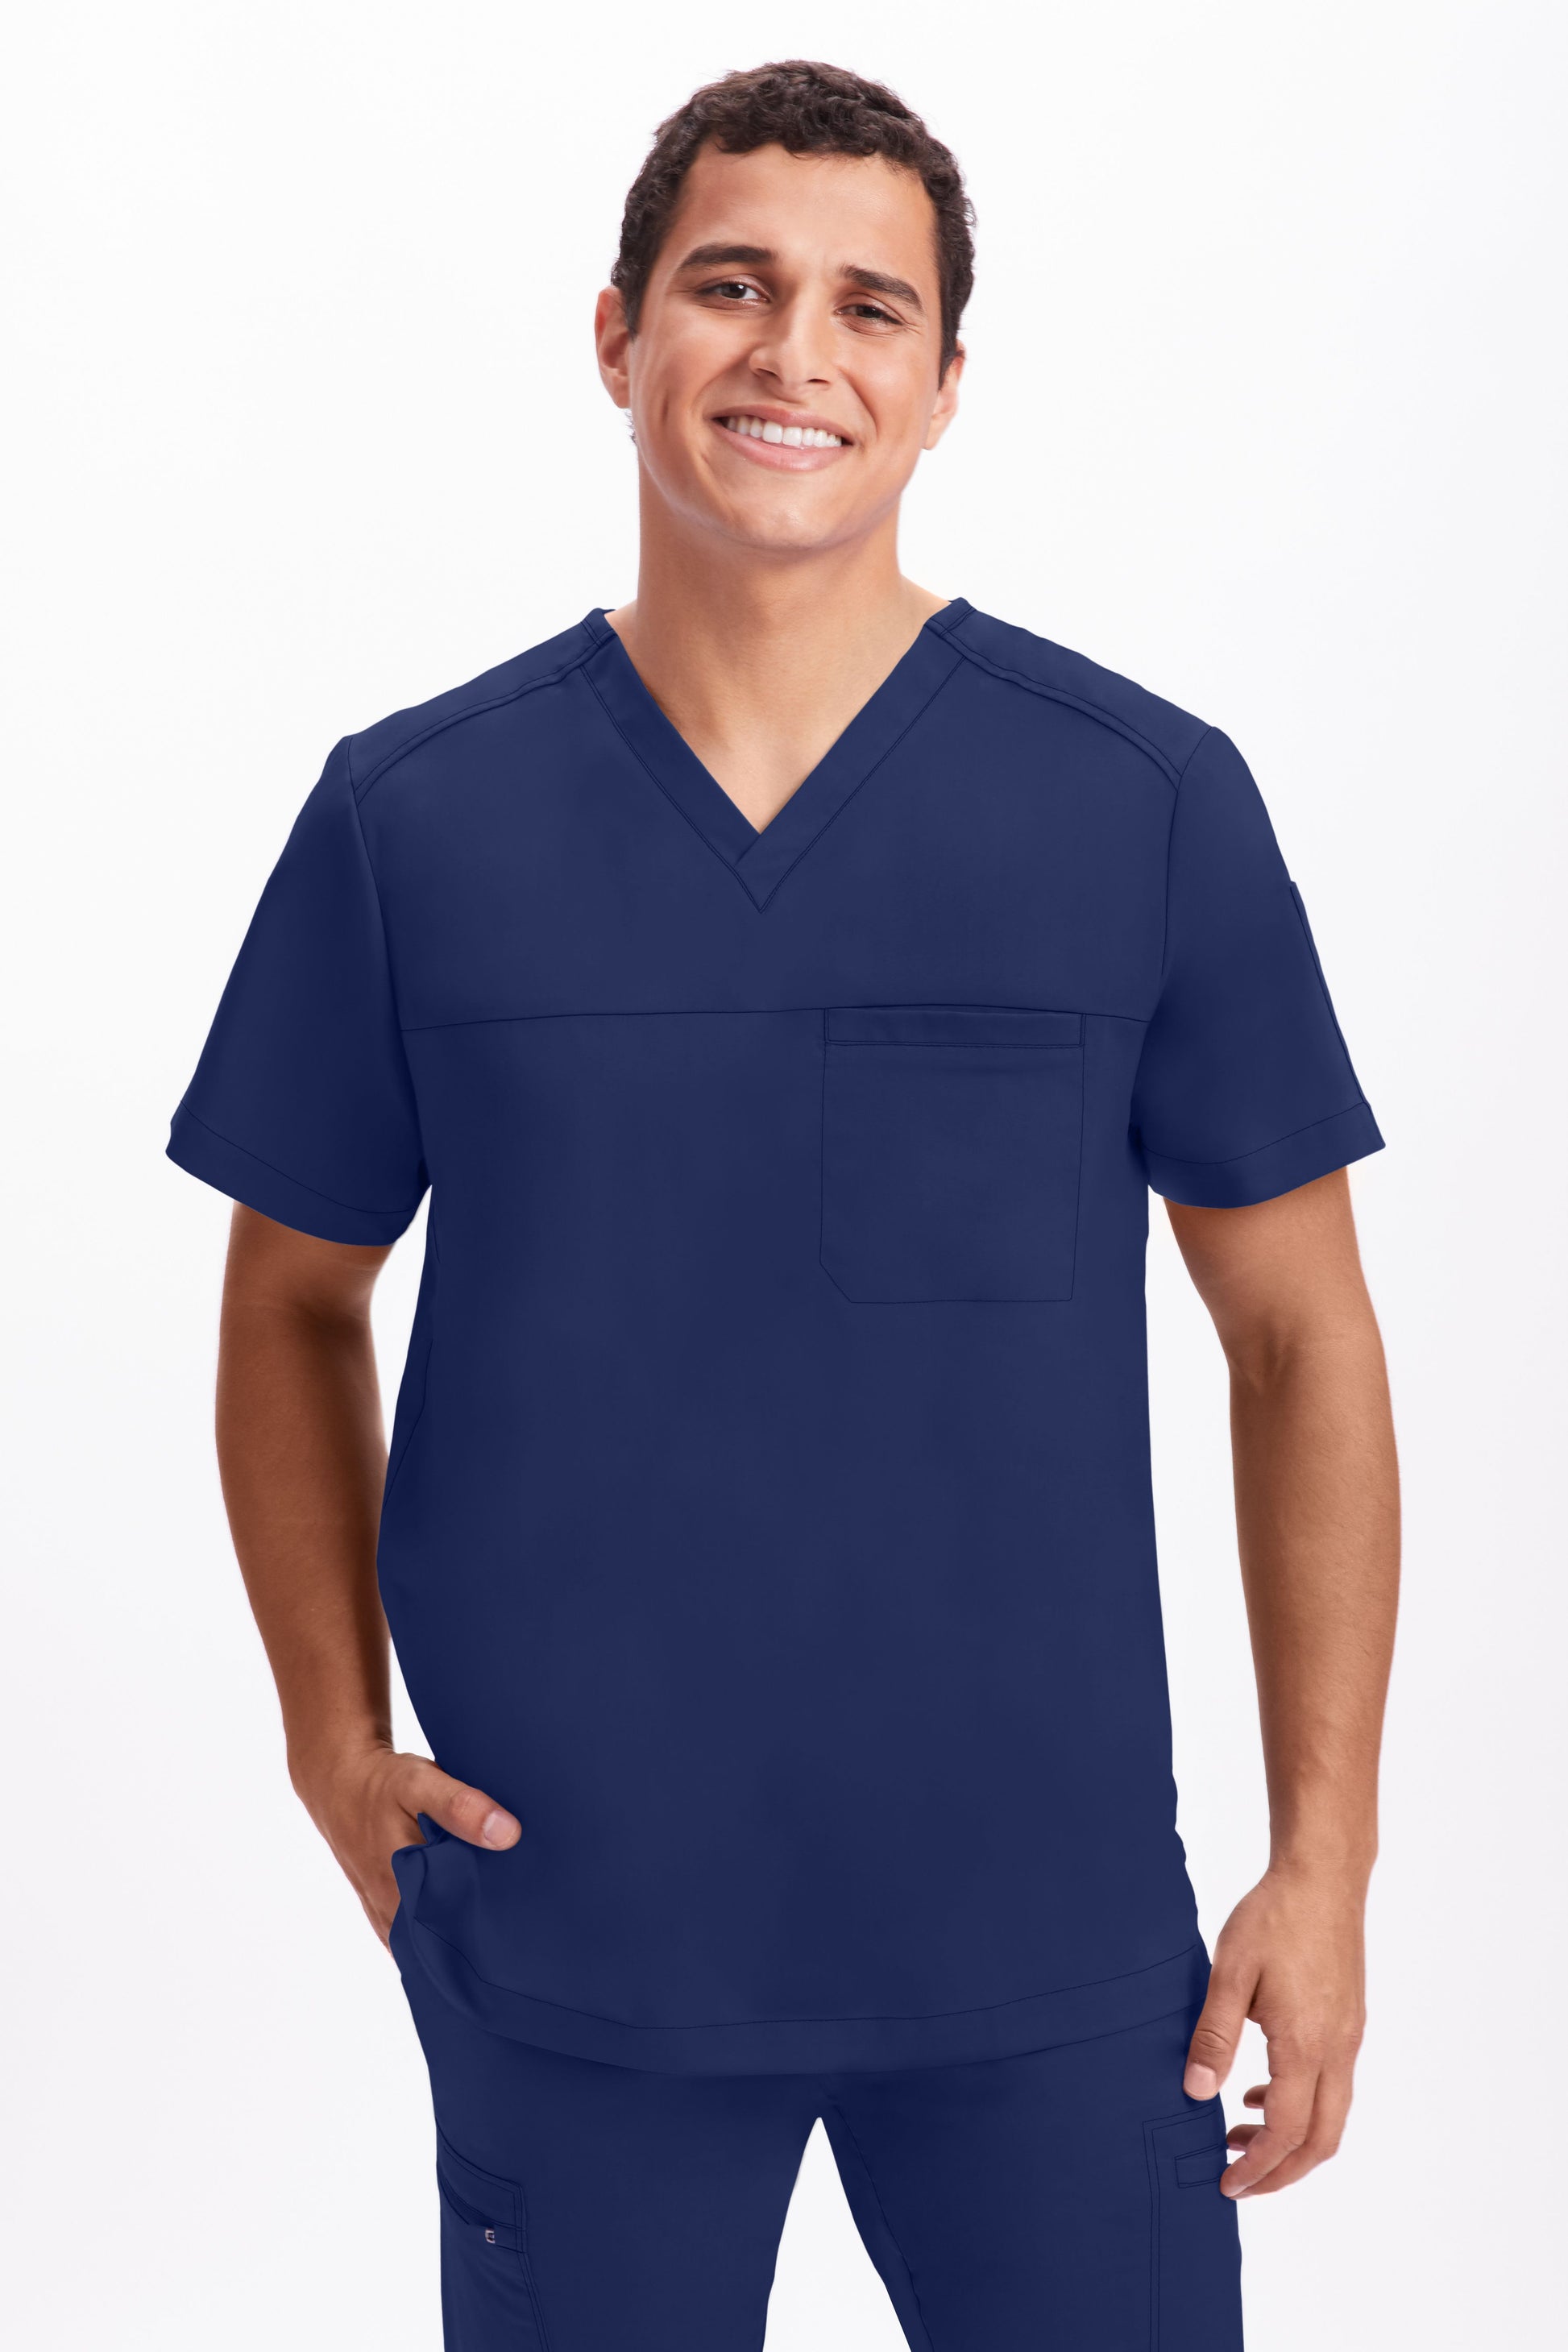 Men's Scrubs & Male Nursing Uniforms